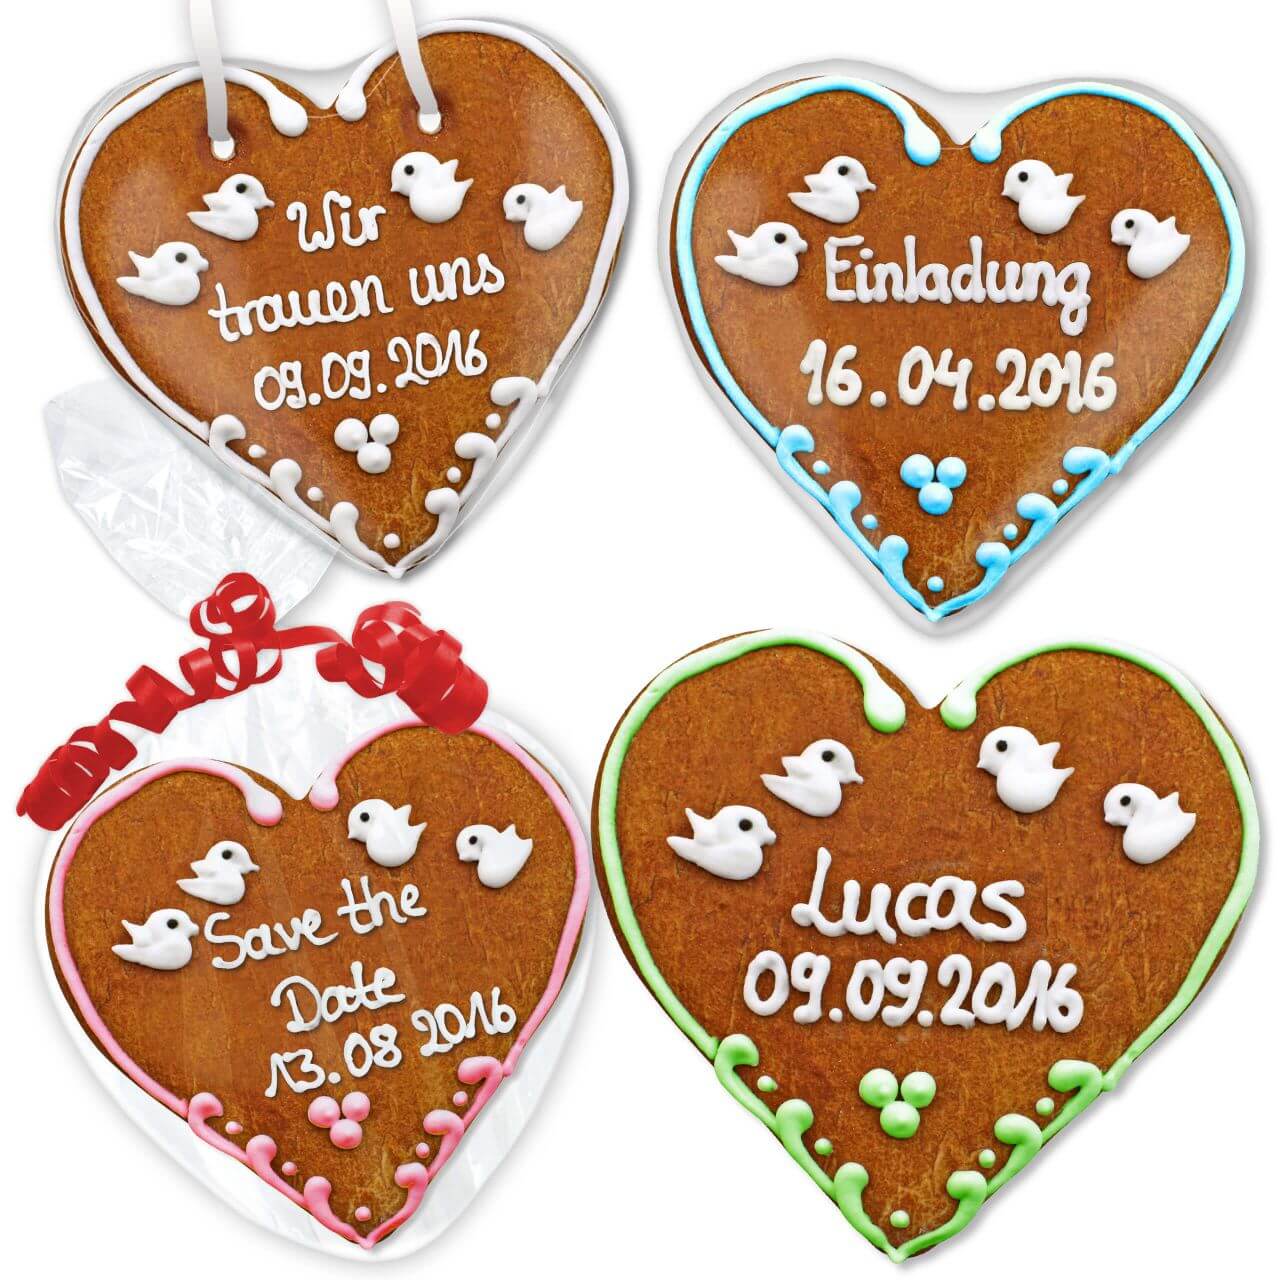 Individual gingerbread heart as wedding invitation set Lucas